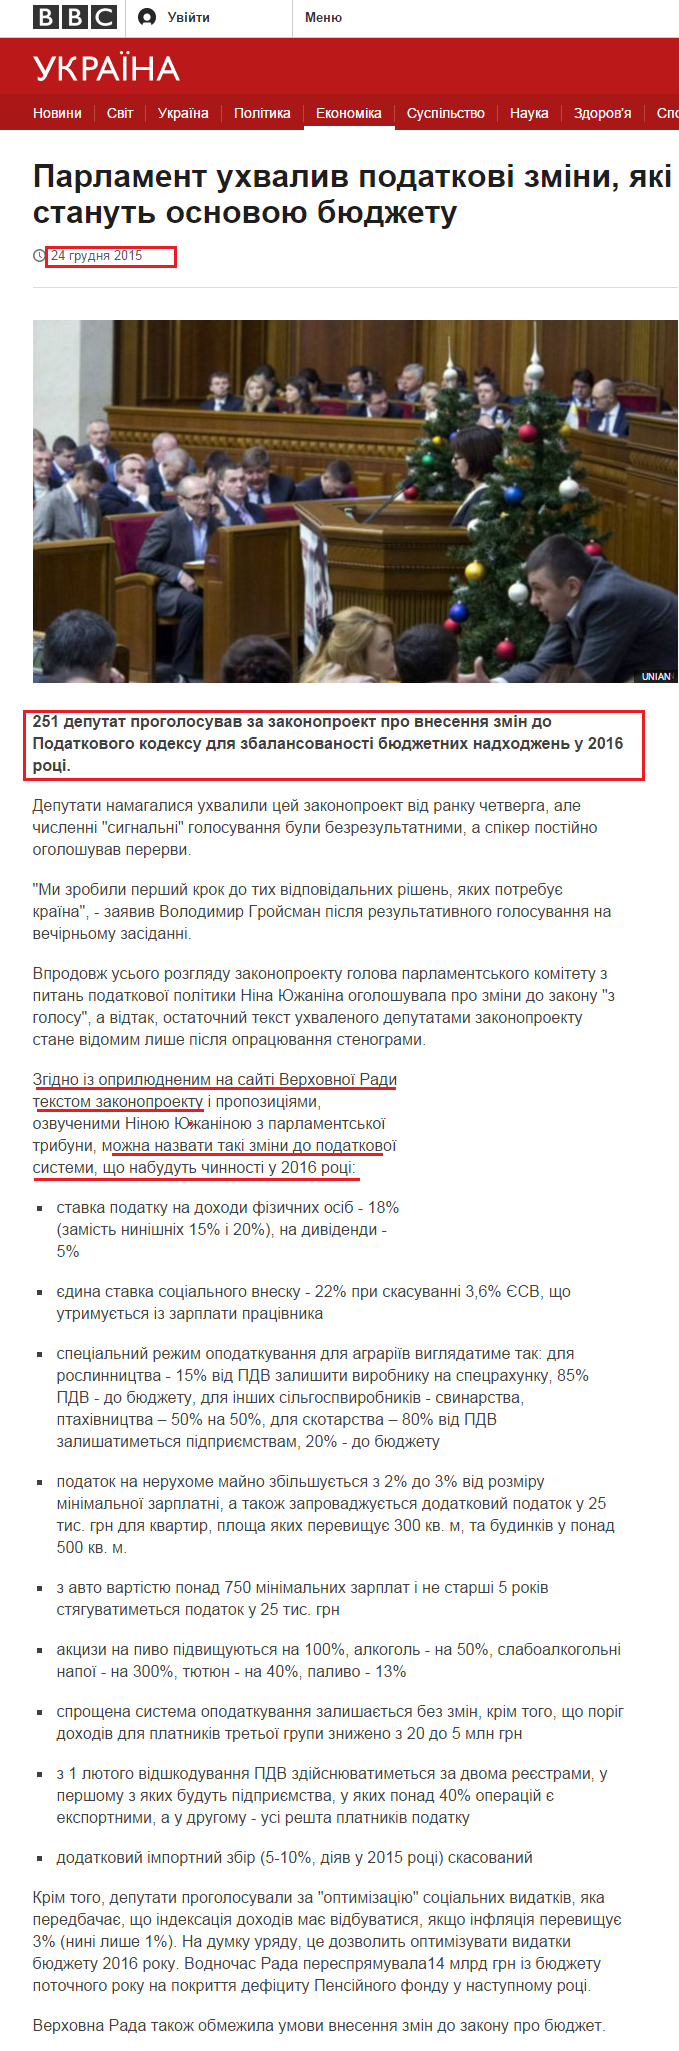 https://www.bbc.com/ukrainian/business/2015/12/151224_taxes_budget_az